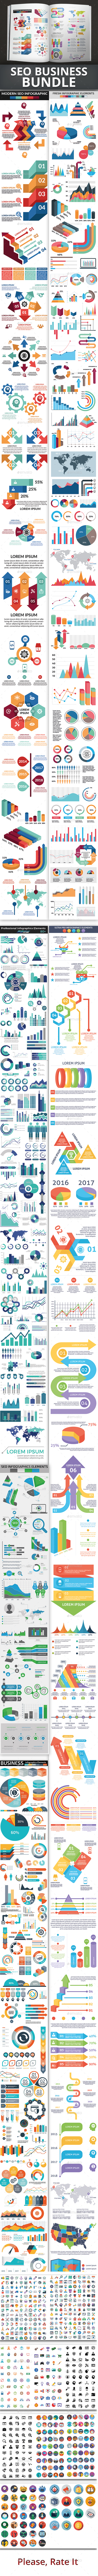 GraphicRiver Seo Business Bundle Infographic Elements 21138317